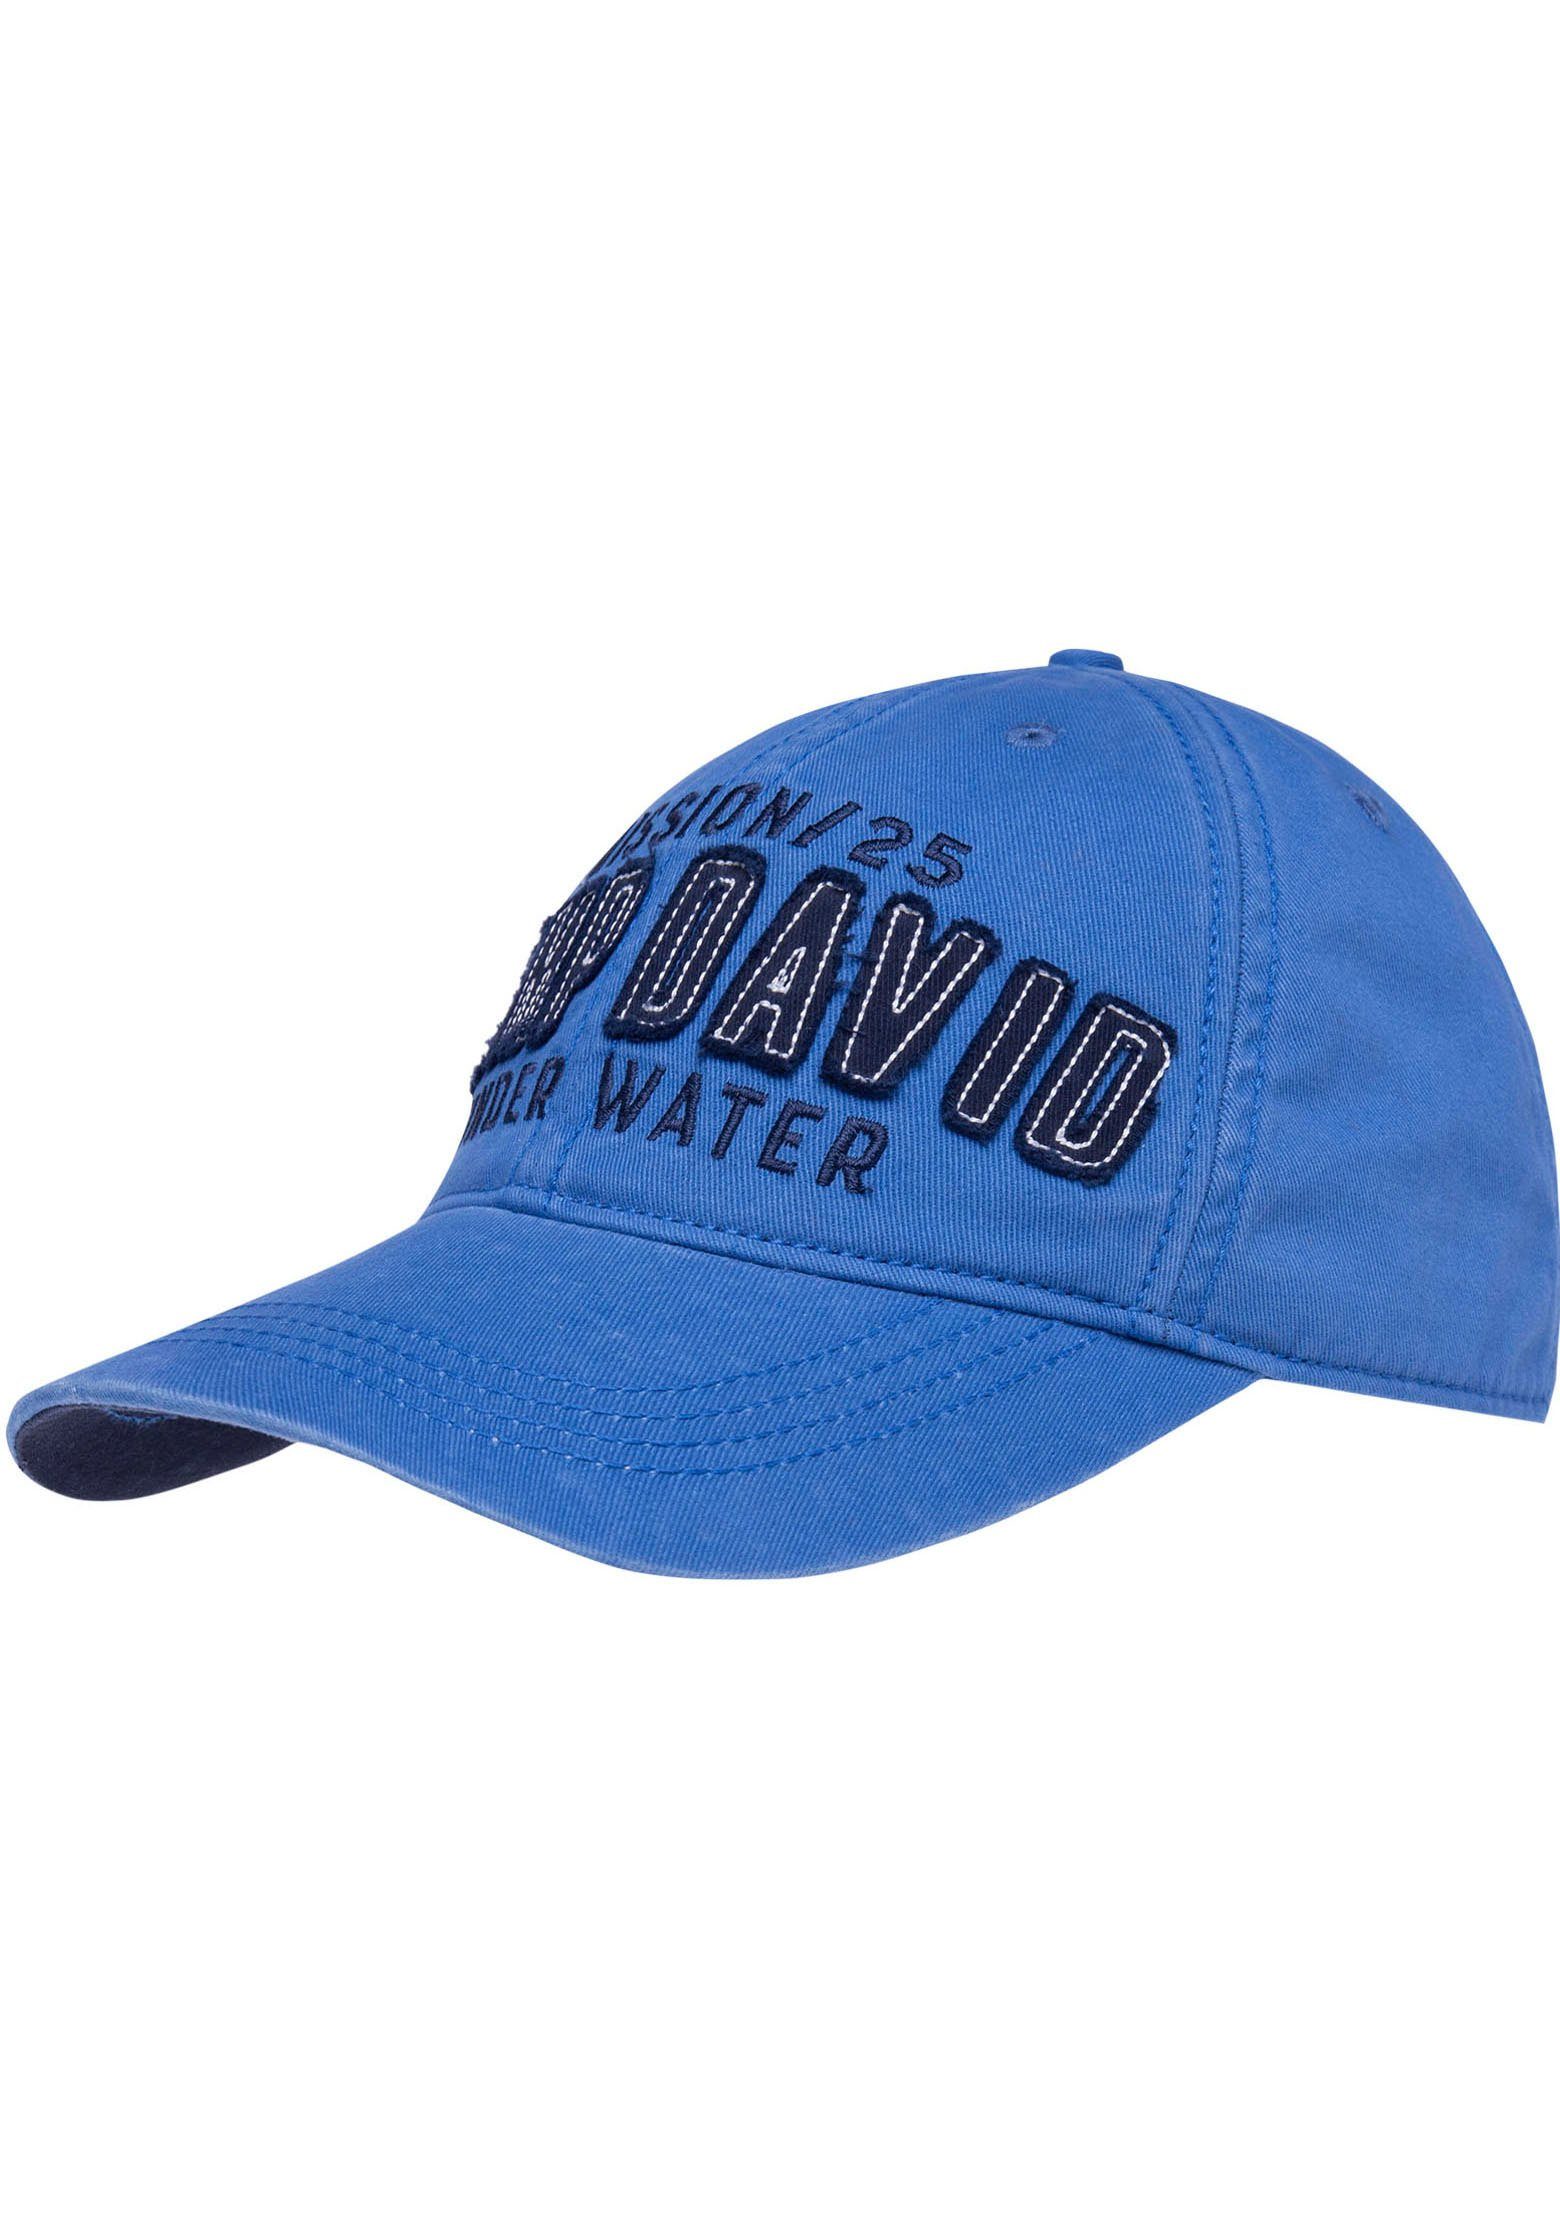 DAVID mit gewaschener Cap pacific Optik CAMP Baseball blue